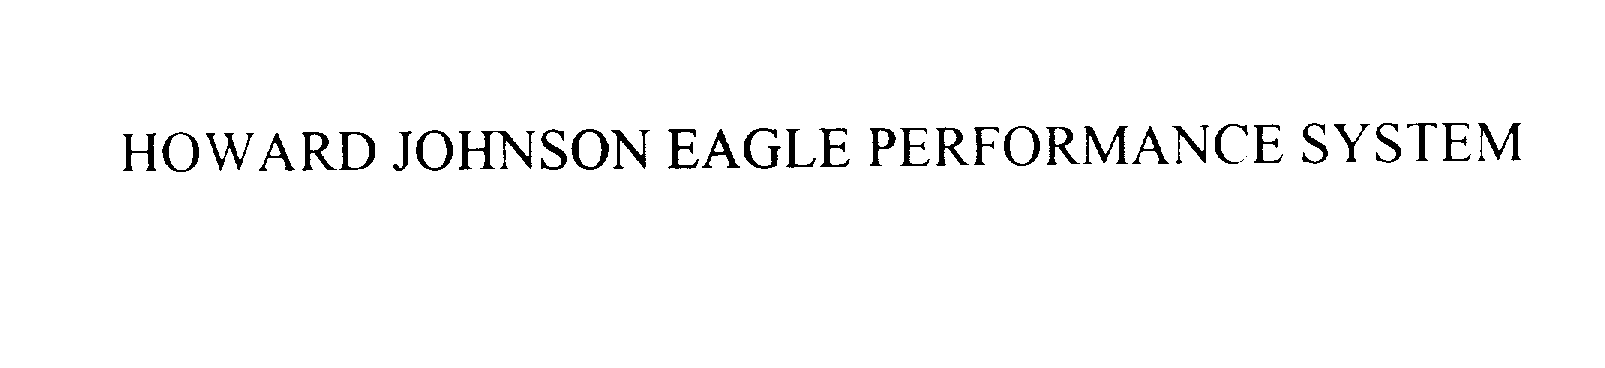  HOWARD JOHNSON EAGLE PERFORMANCE SYSTEM